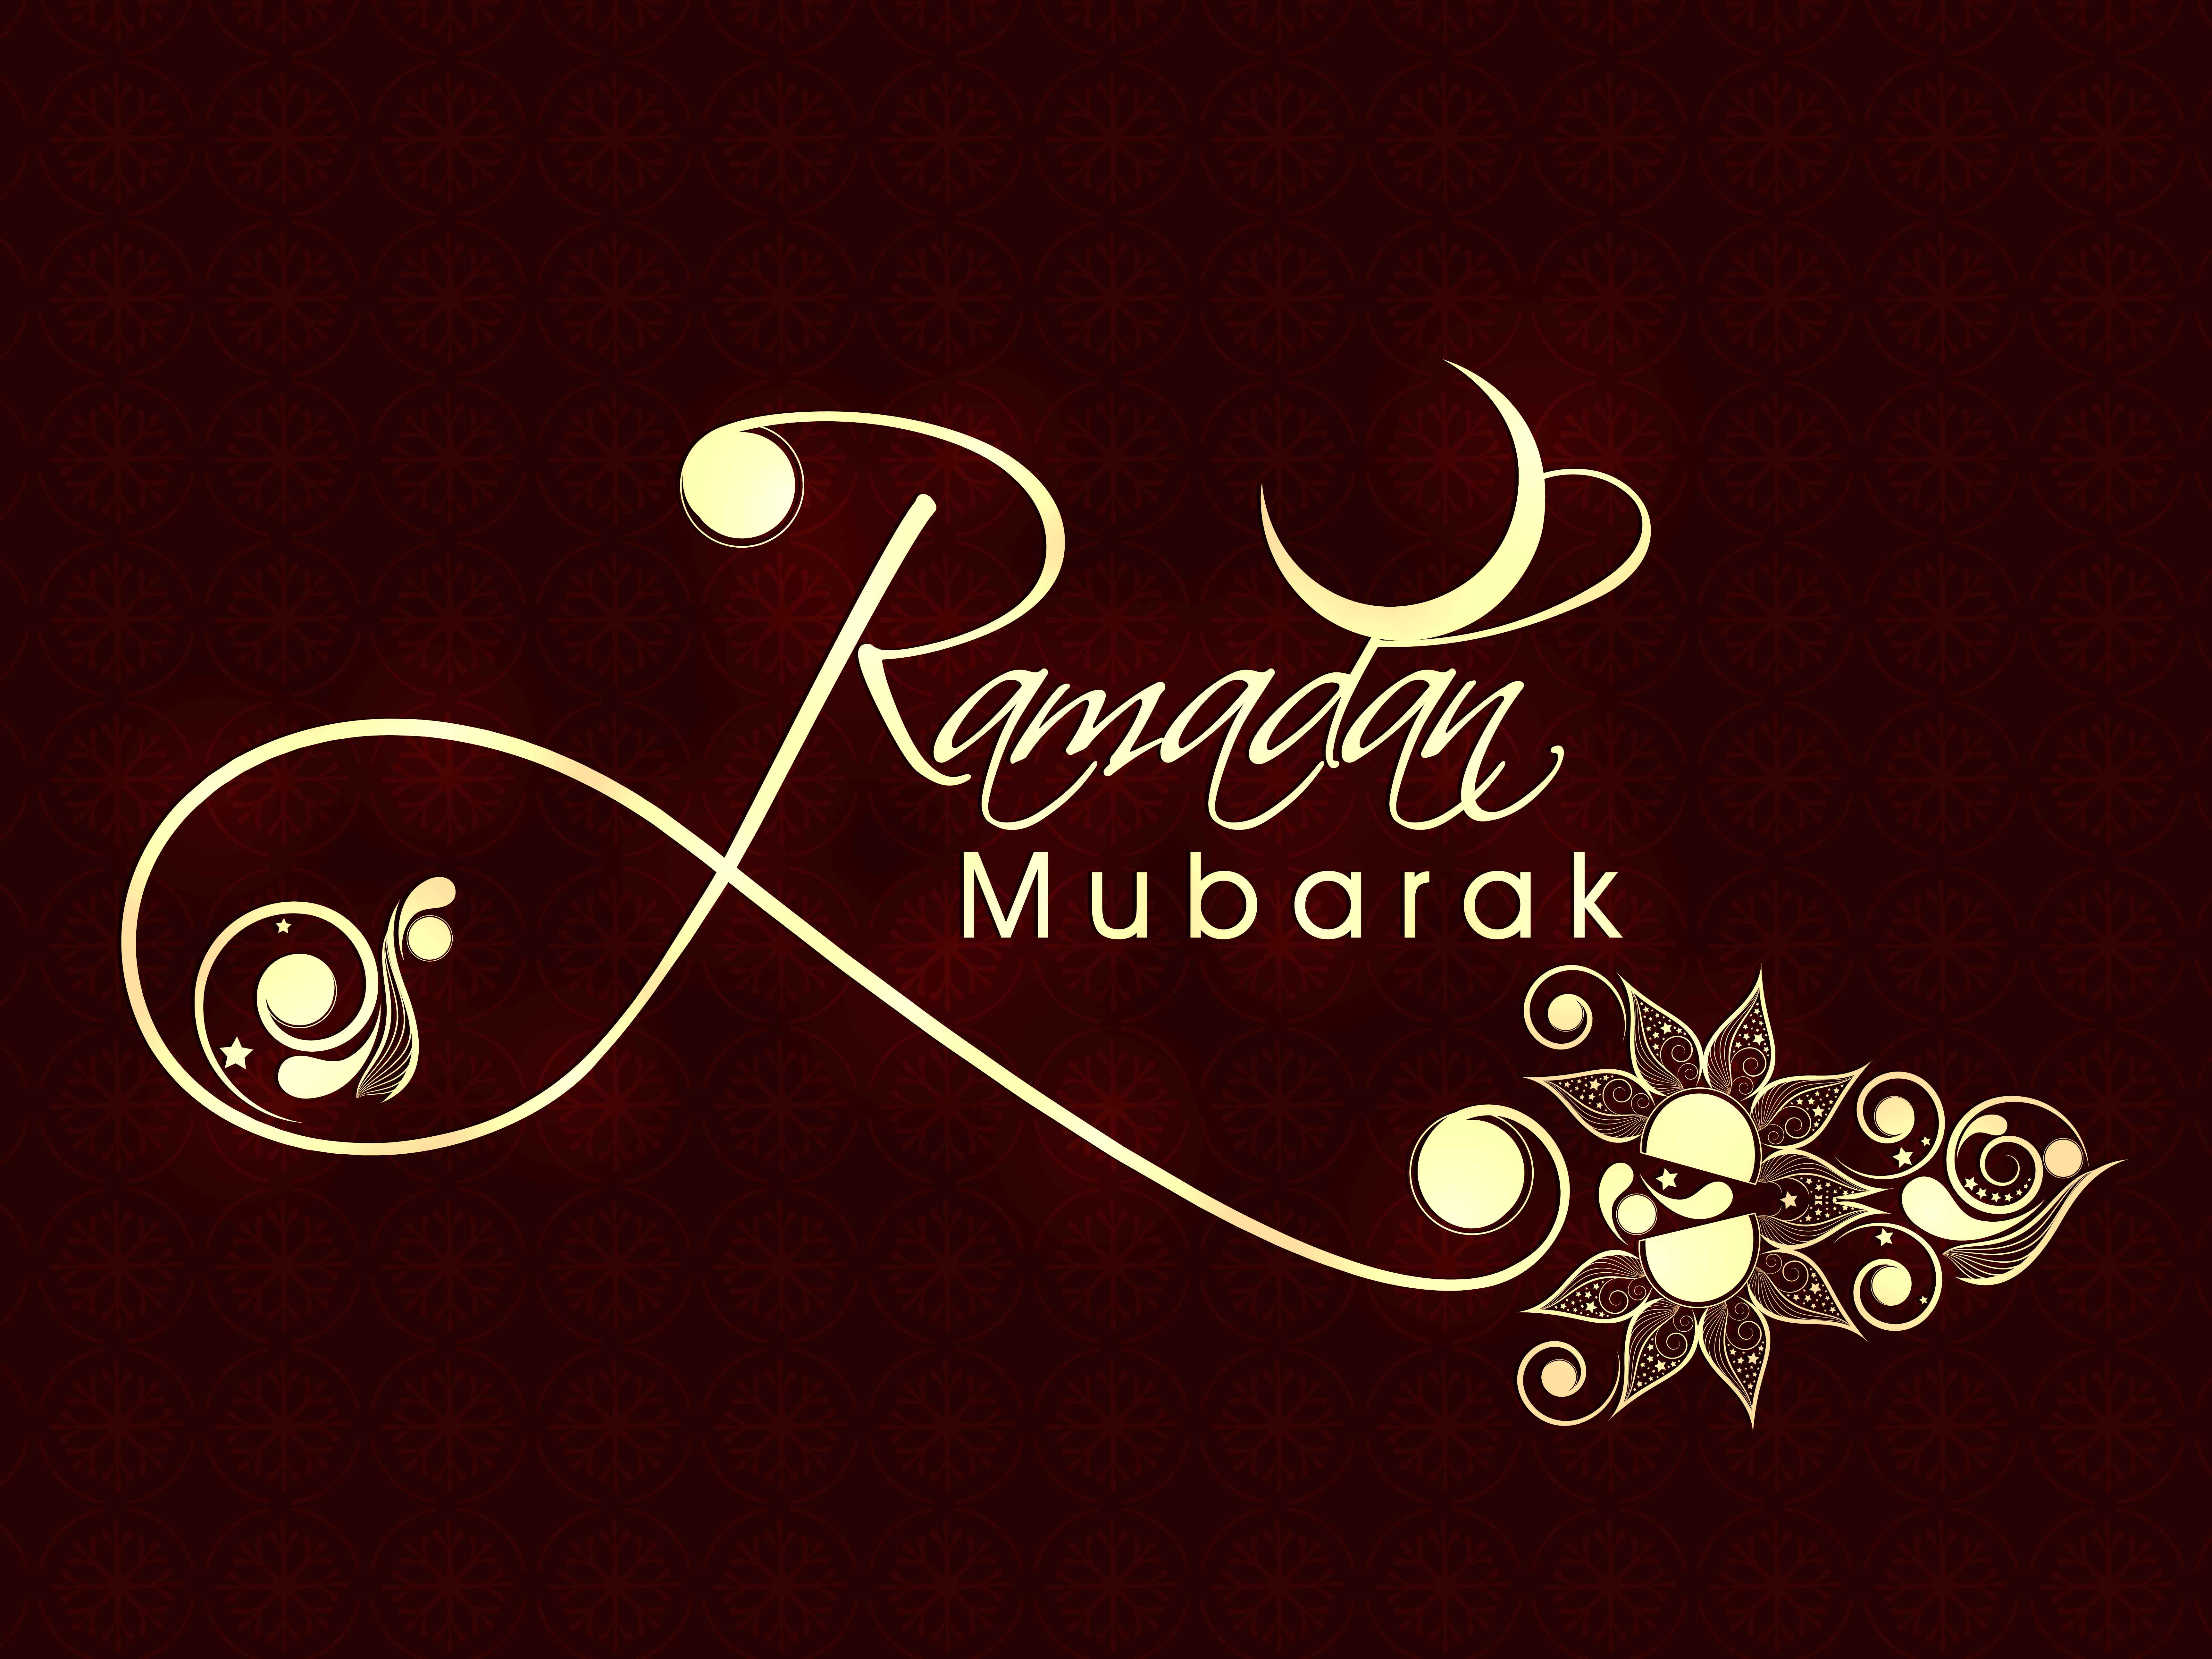 Ramadan Kareem 2016 Wishes, Calendar Image And Wallpaper